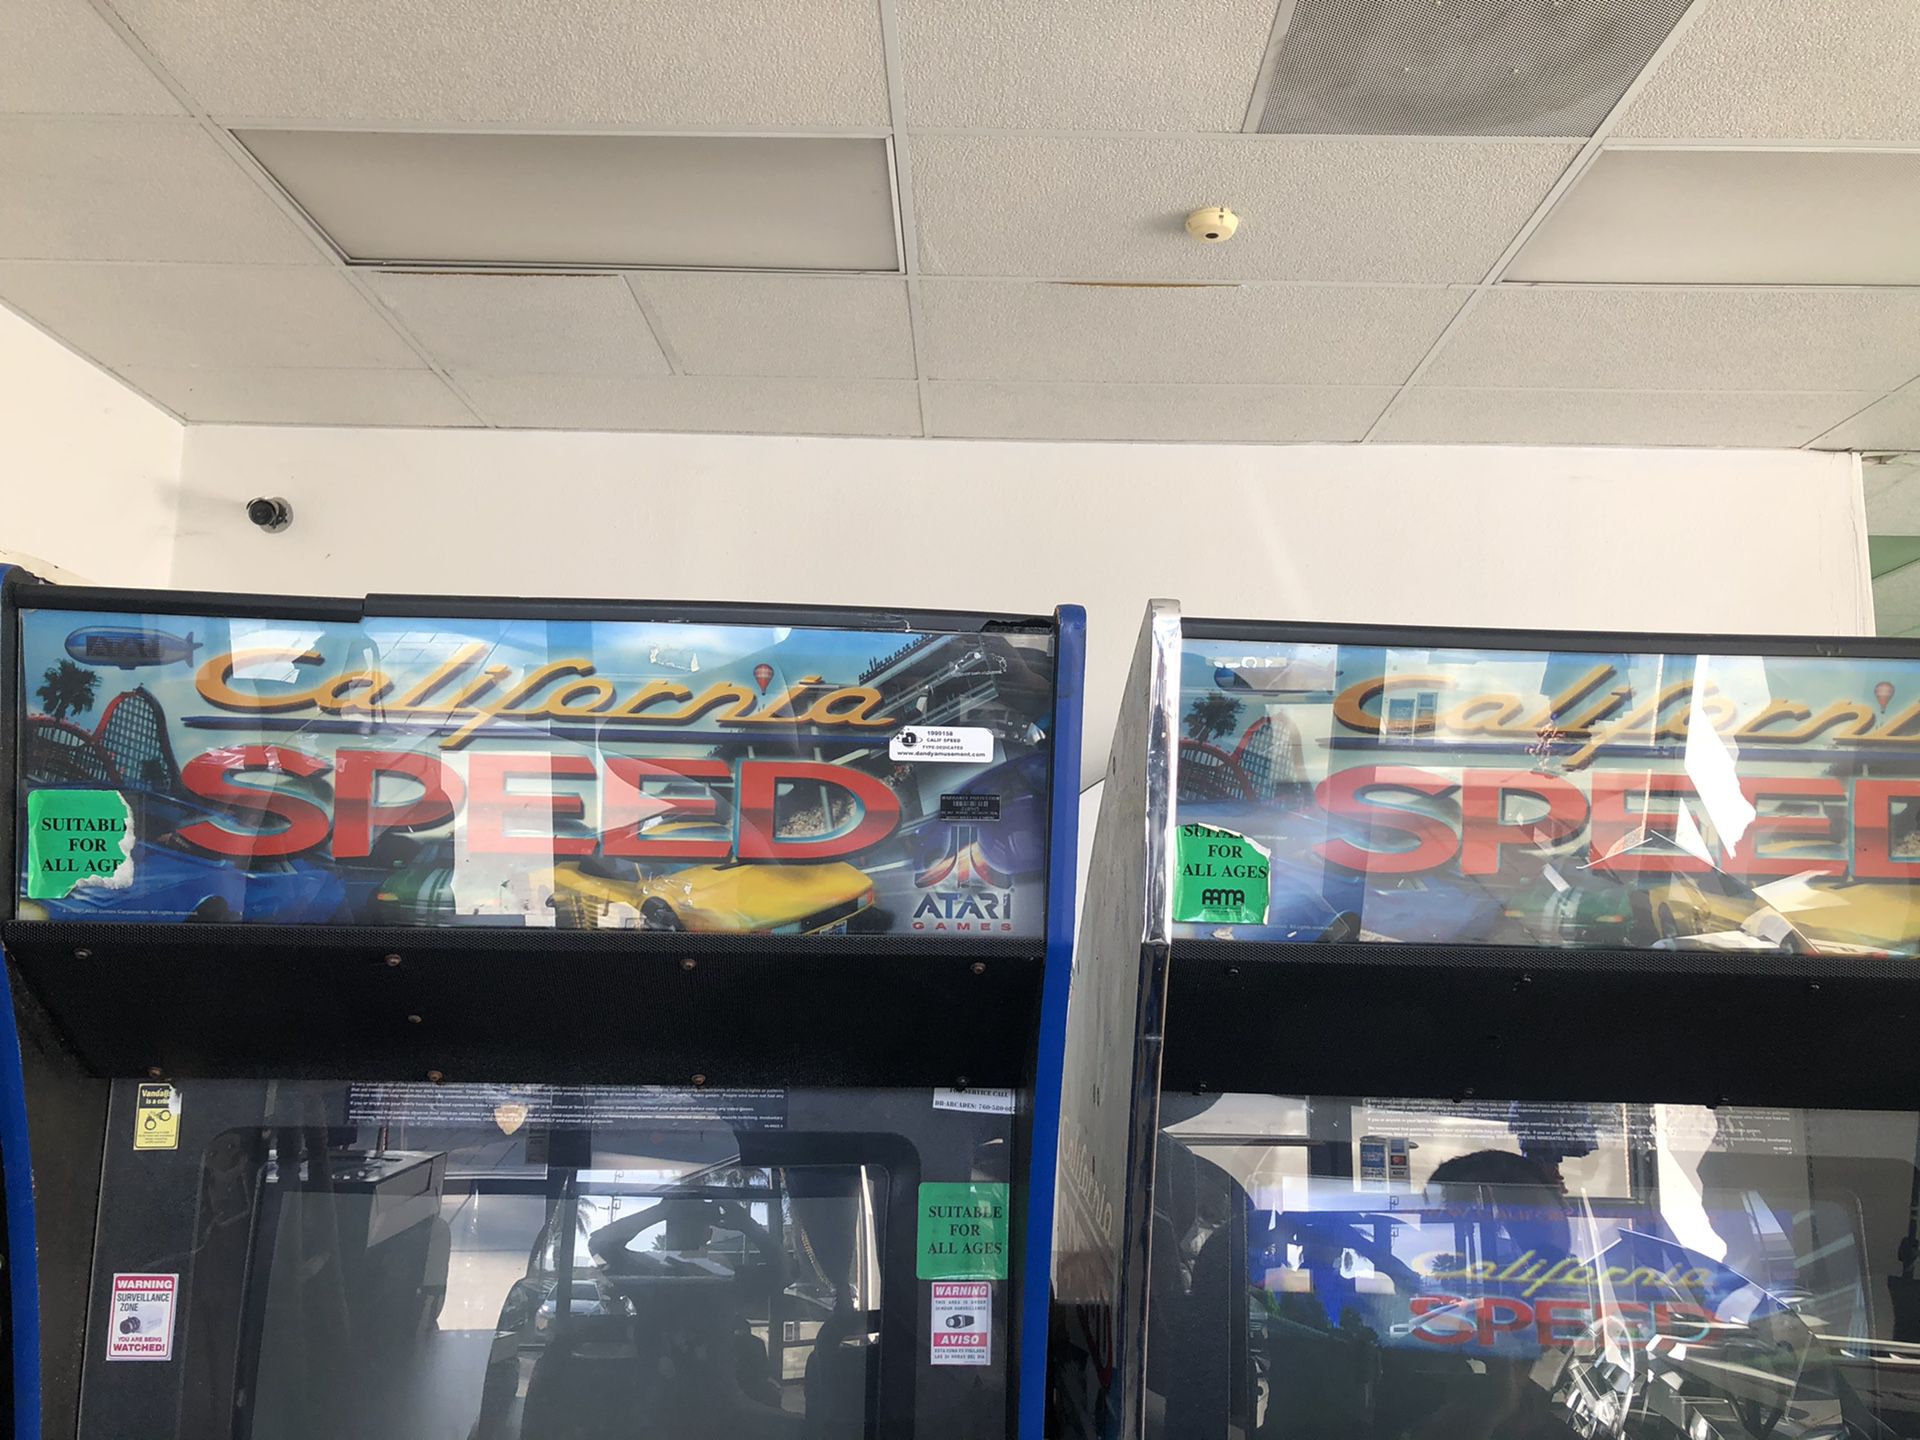 2 California Speed arcade games